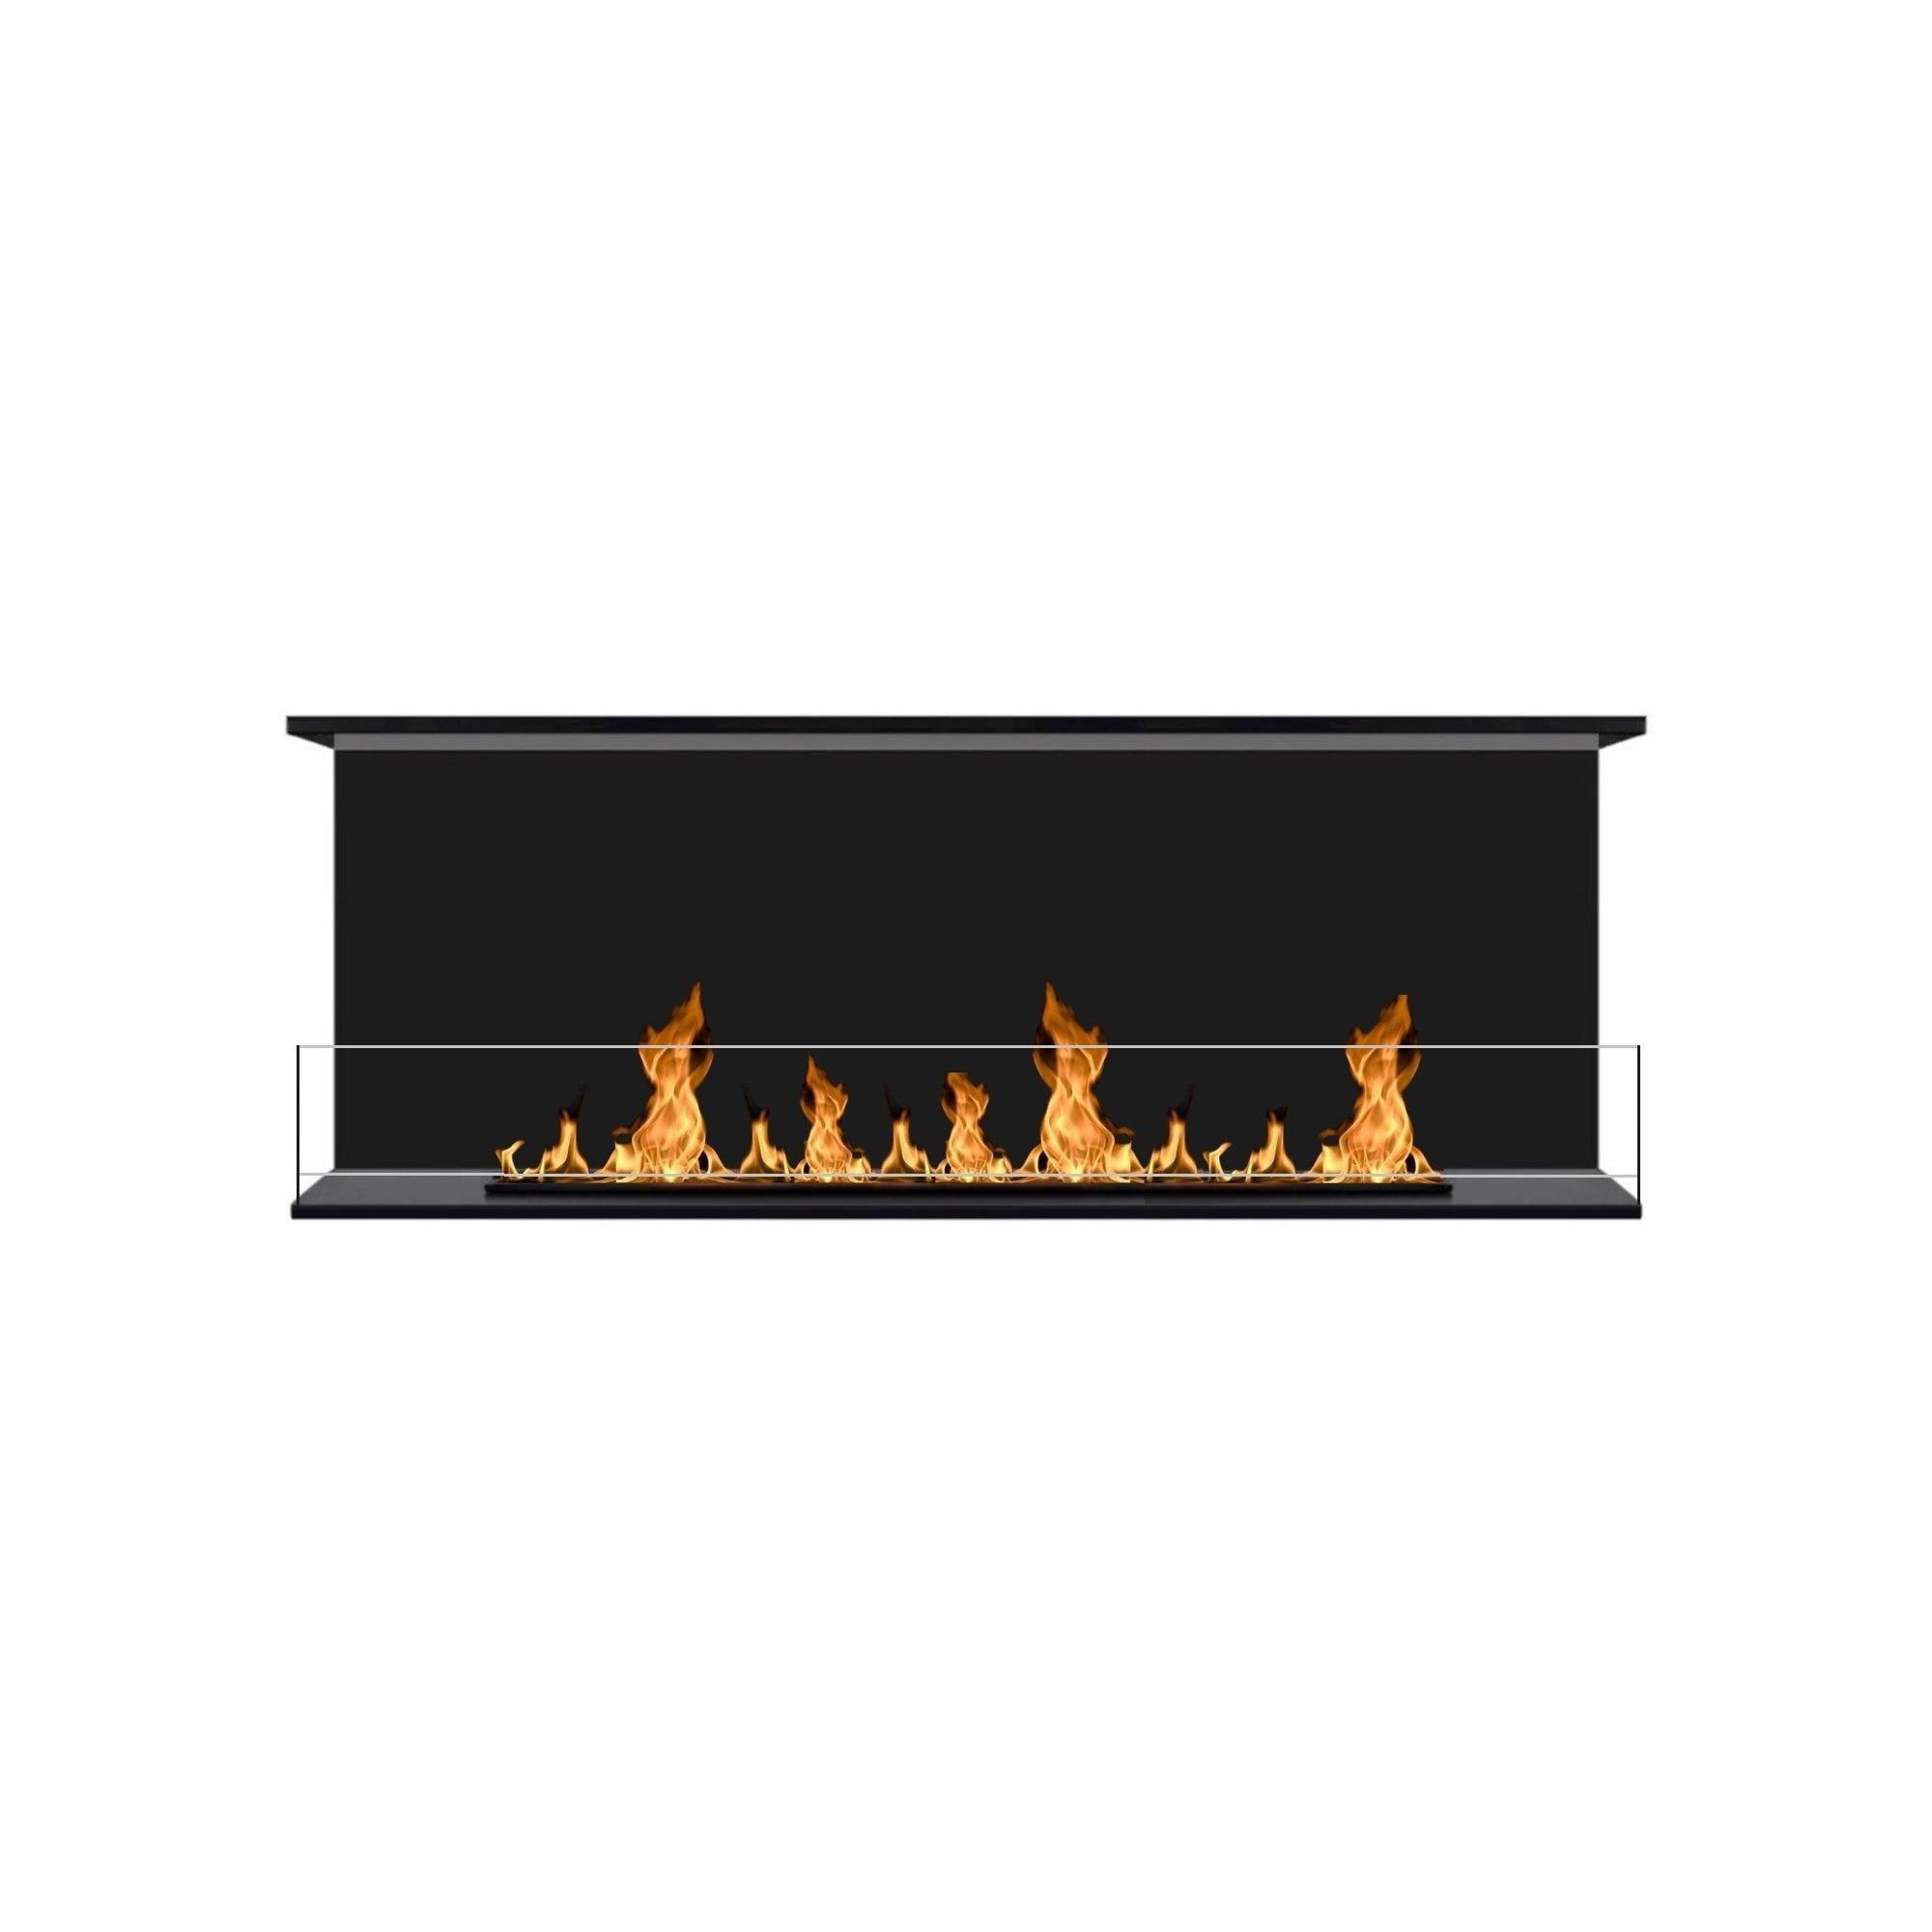 Izala Design Built-in Fireplace 157 CM